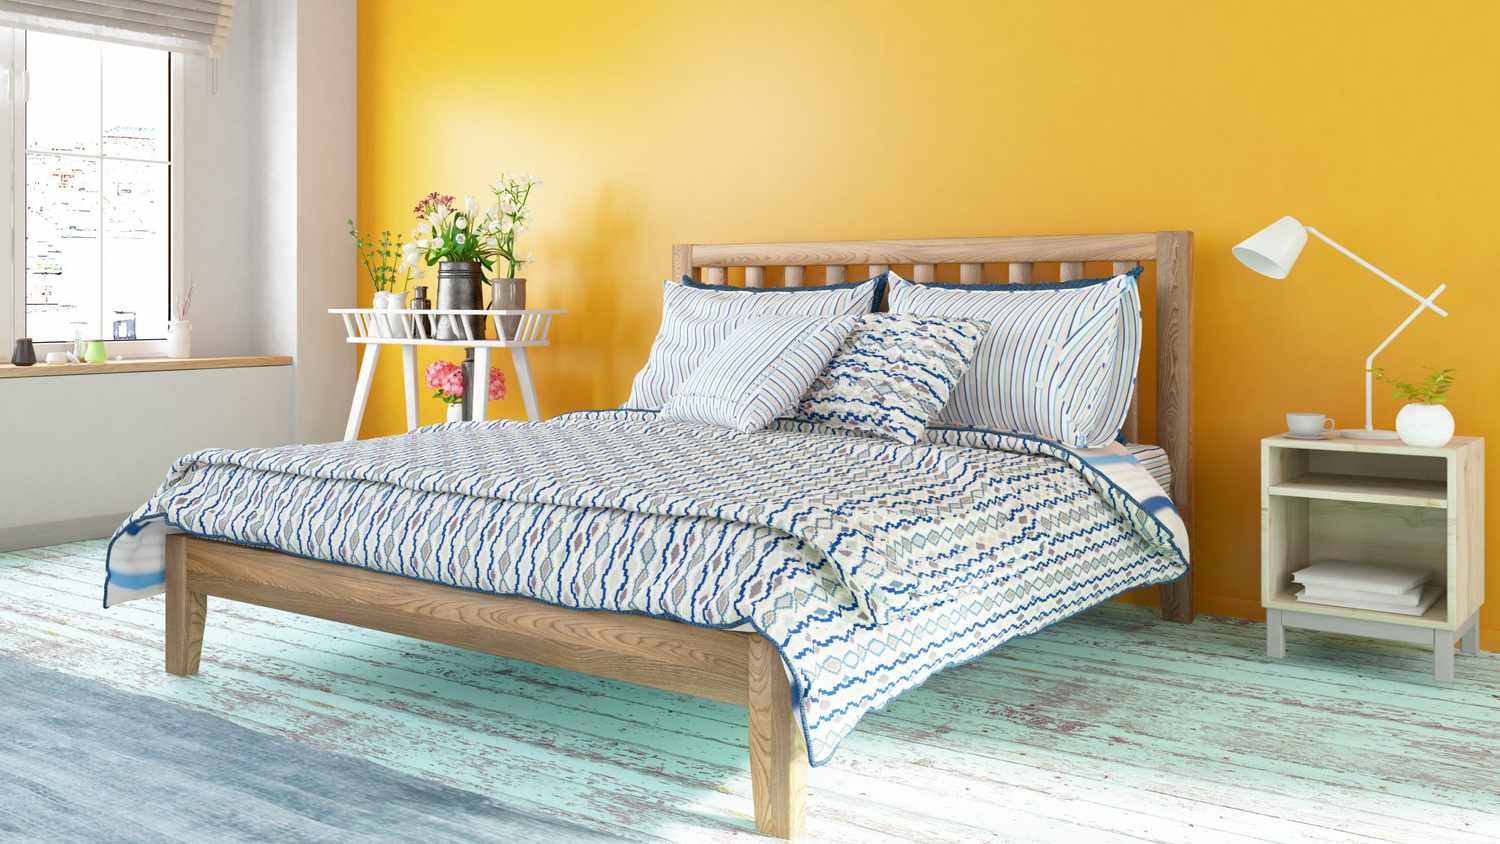 Best Yellow Paint Colors, yellow walls in bedroom